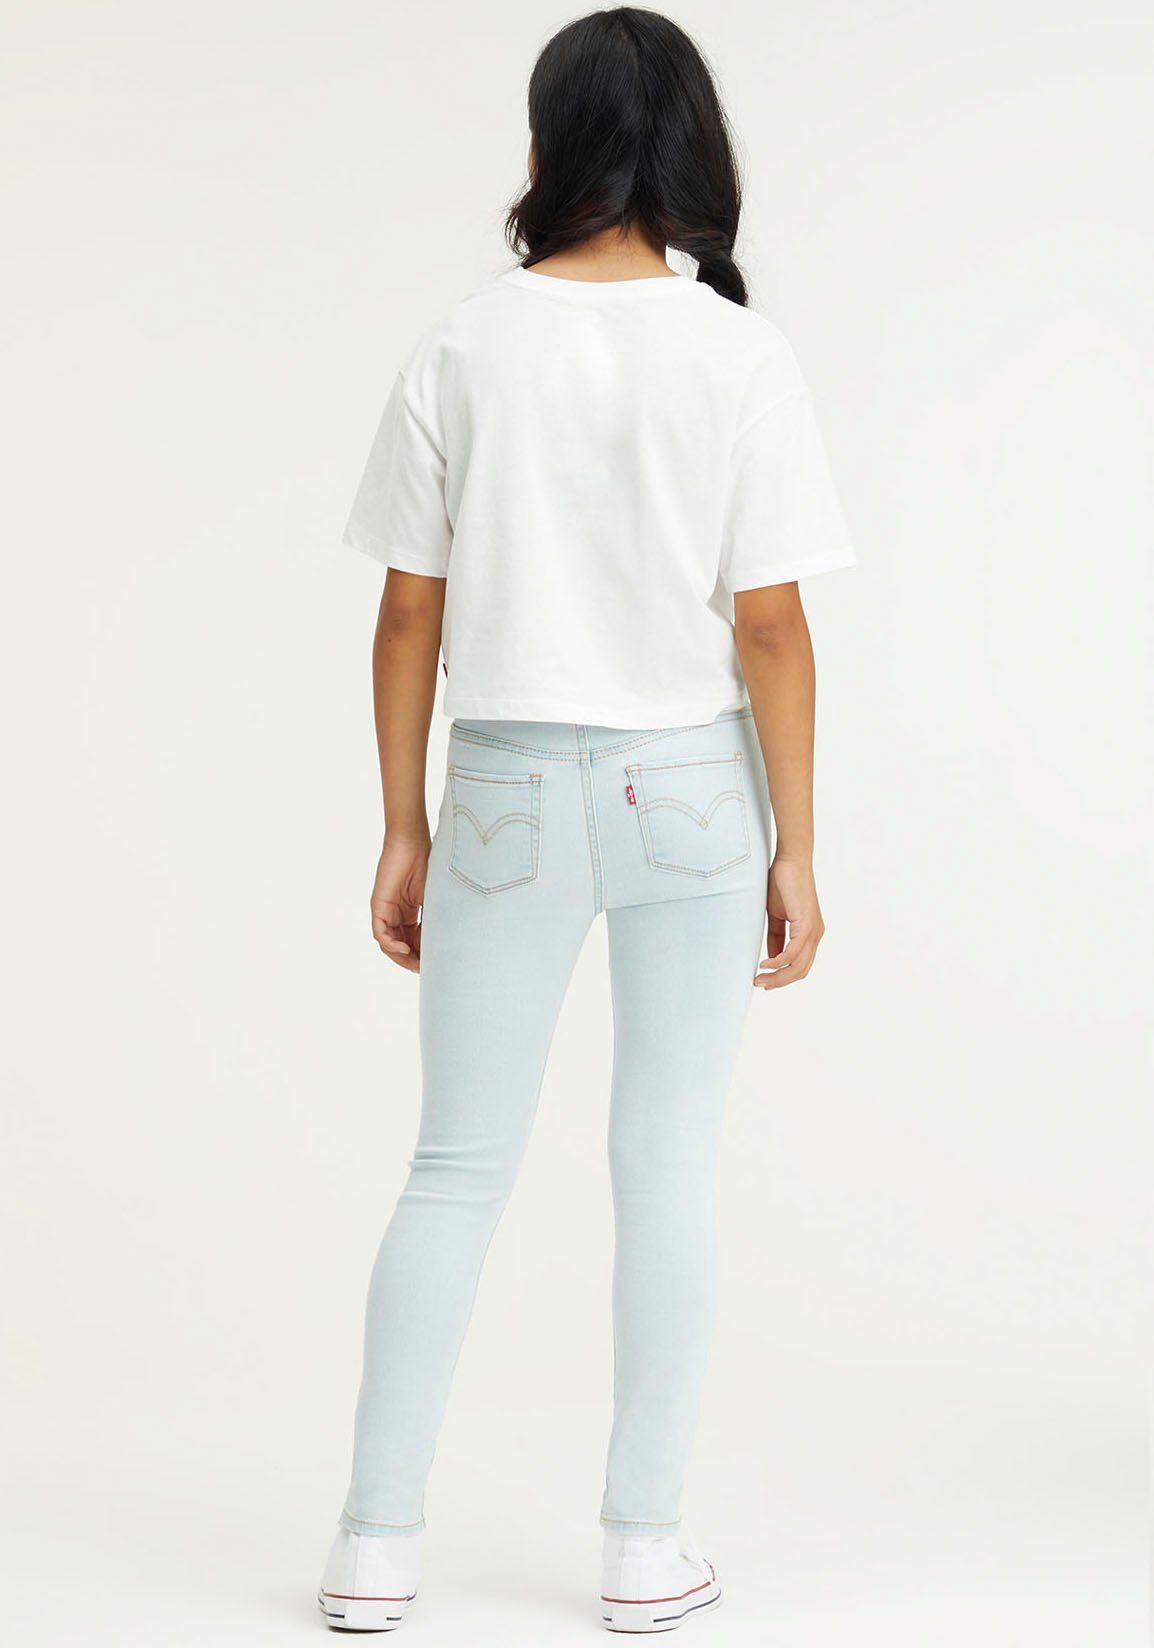 HIGH SUPER superlight Stretch-Jeans SKINNY Kids GIRLS 720™ RISE for Levi's®